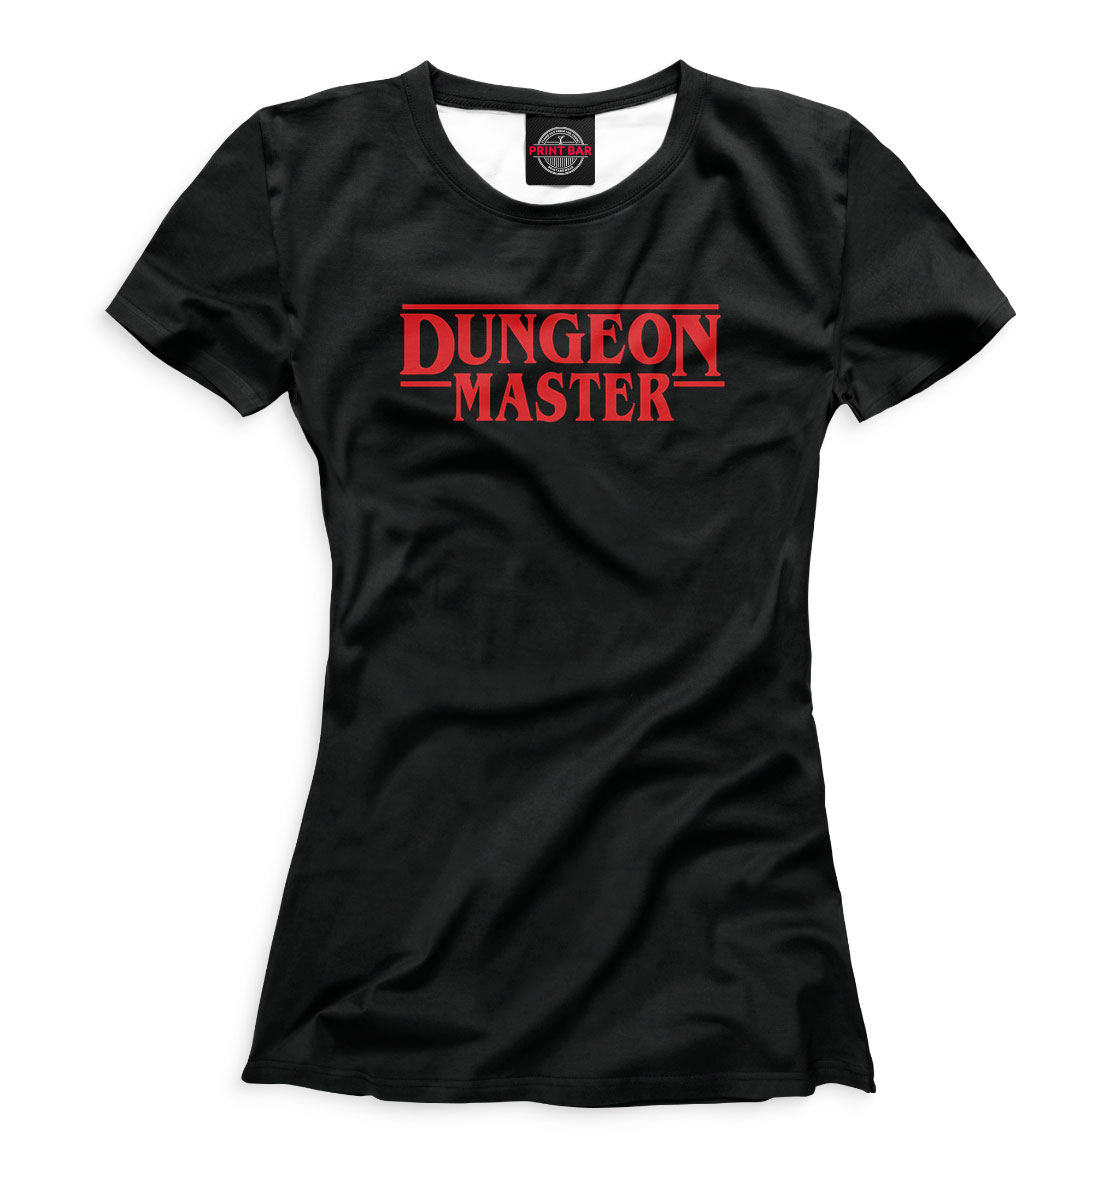 Футболка Dungeon Master для женщин, артикул: GCM-724012-fut-1mp